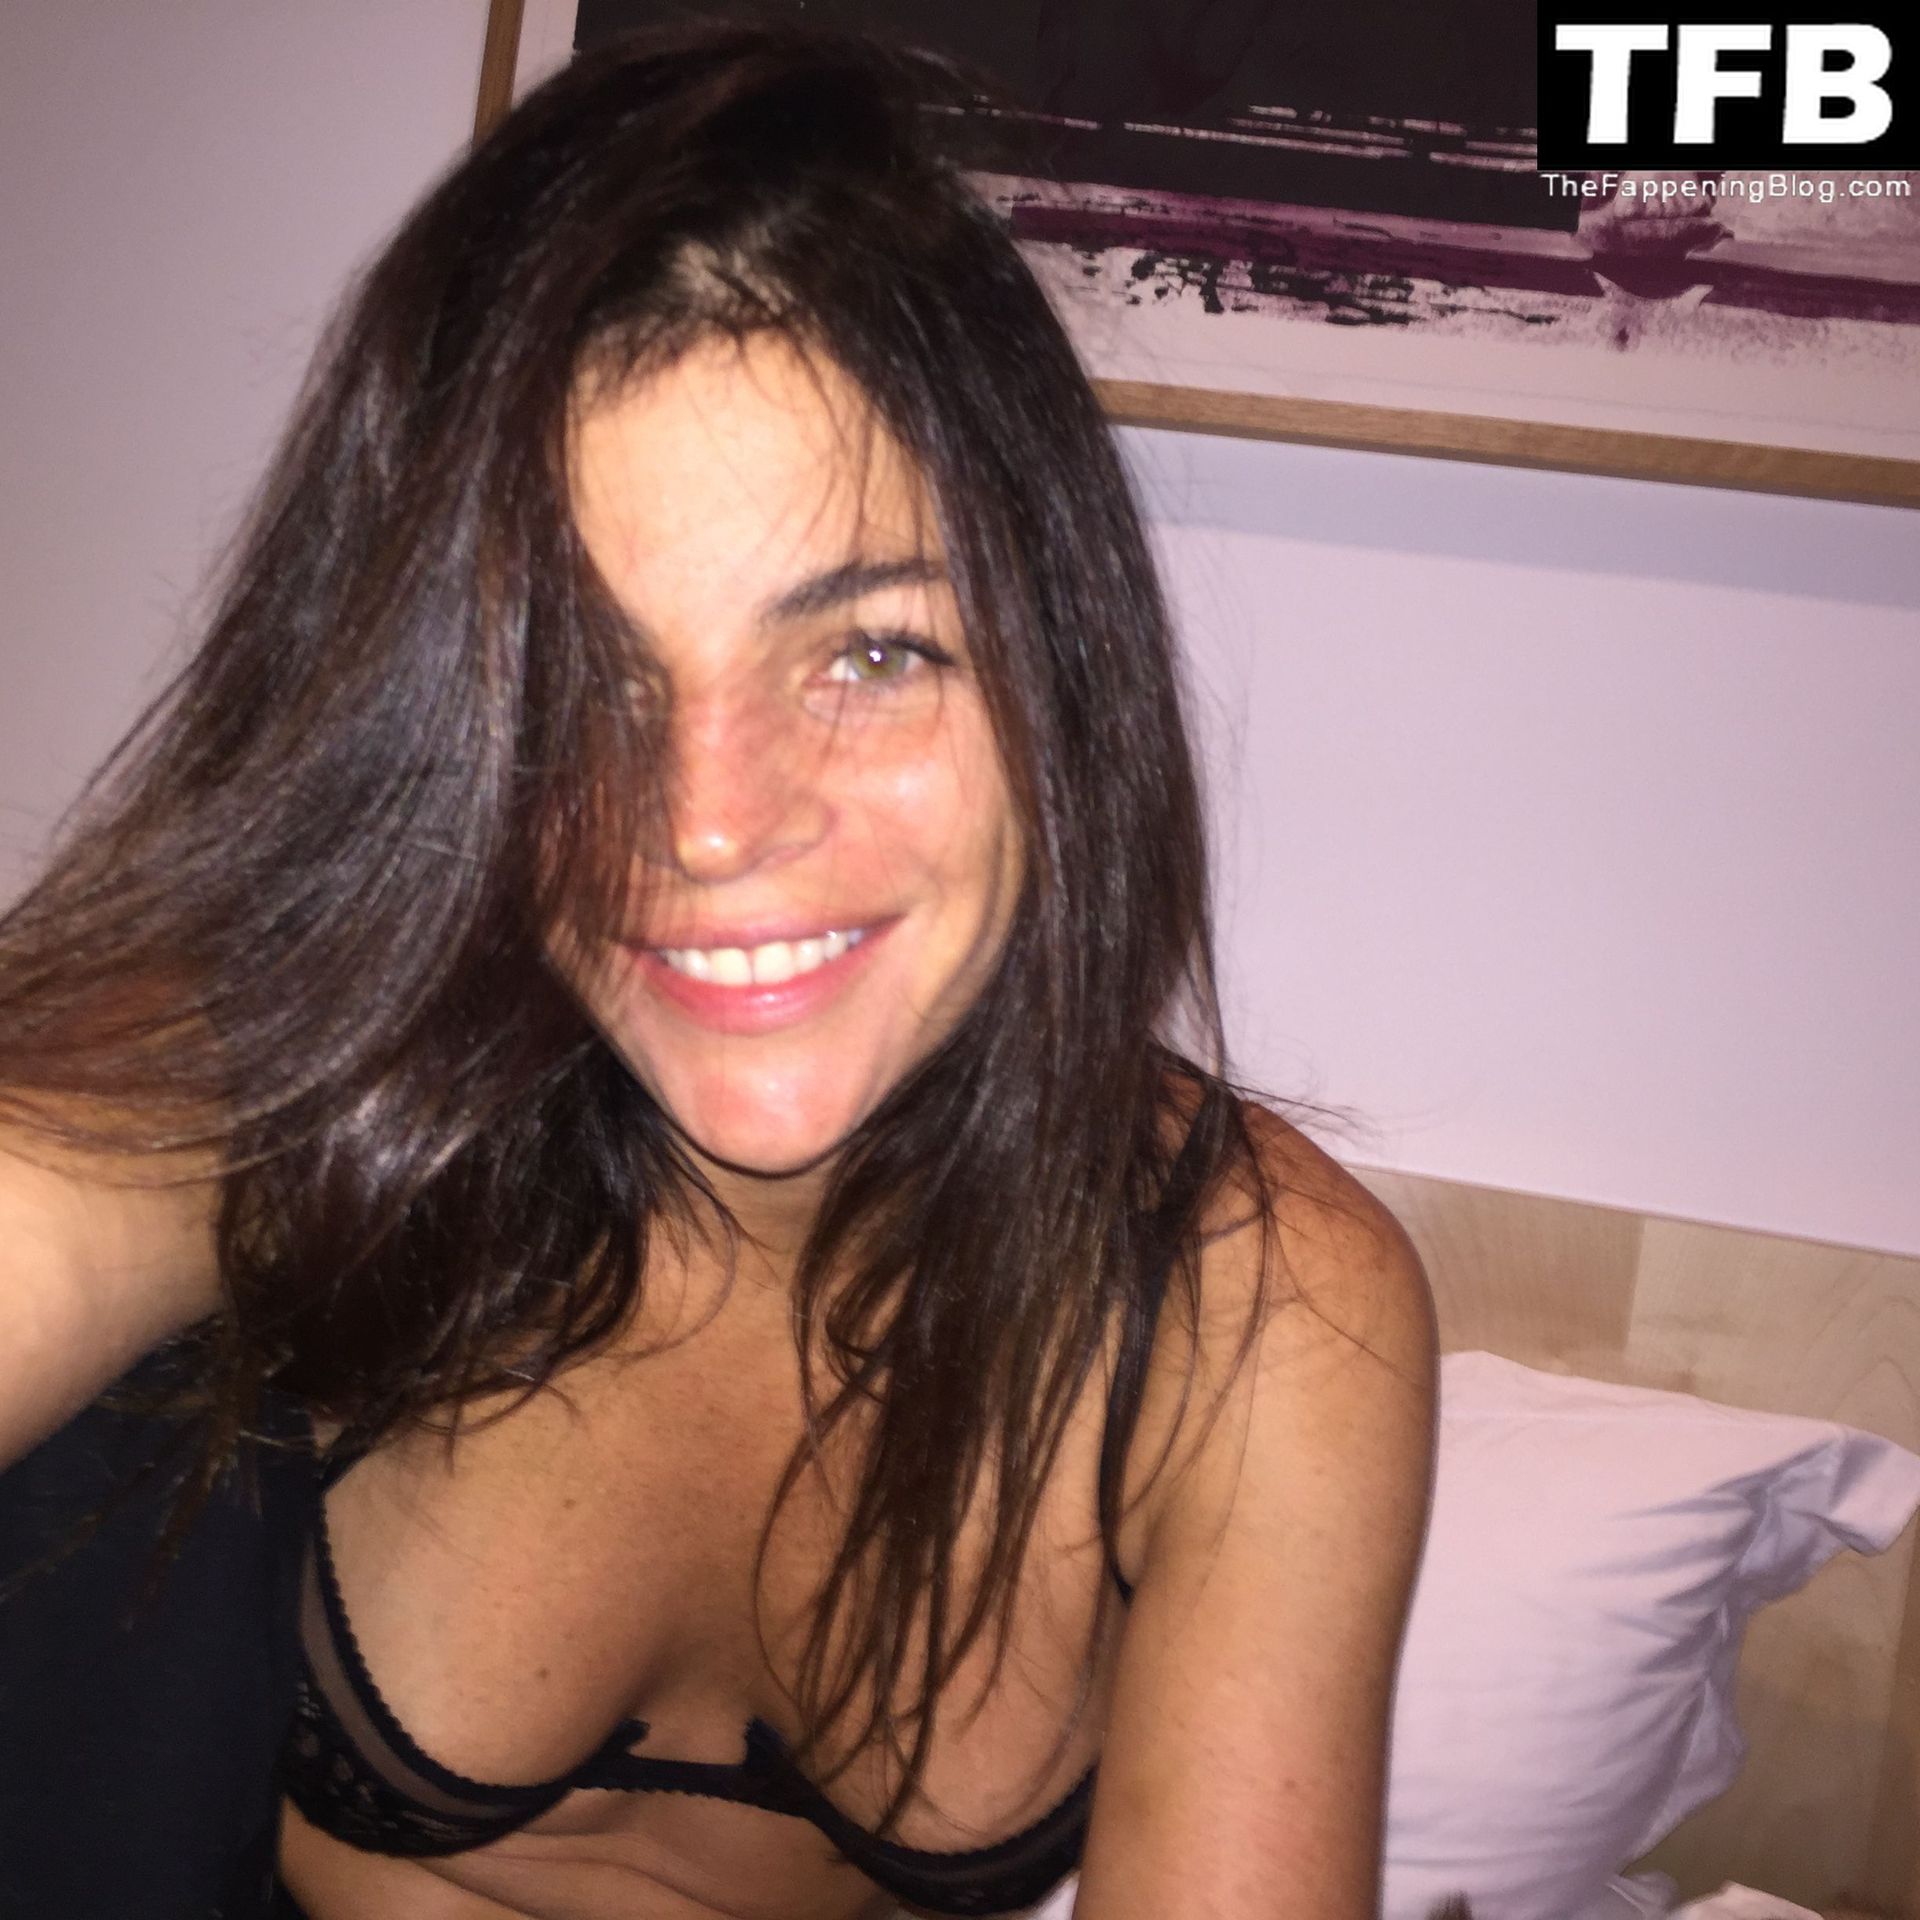 Morgana-Balzarotti-Nude-Sexy-Leaked-The-Fappening-Blog-8-1.jpg